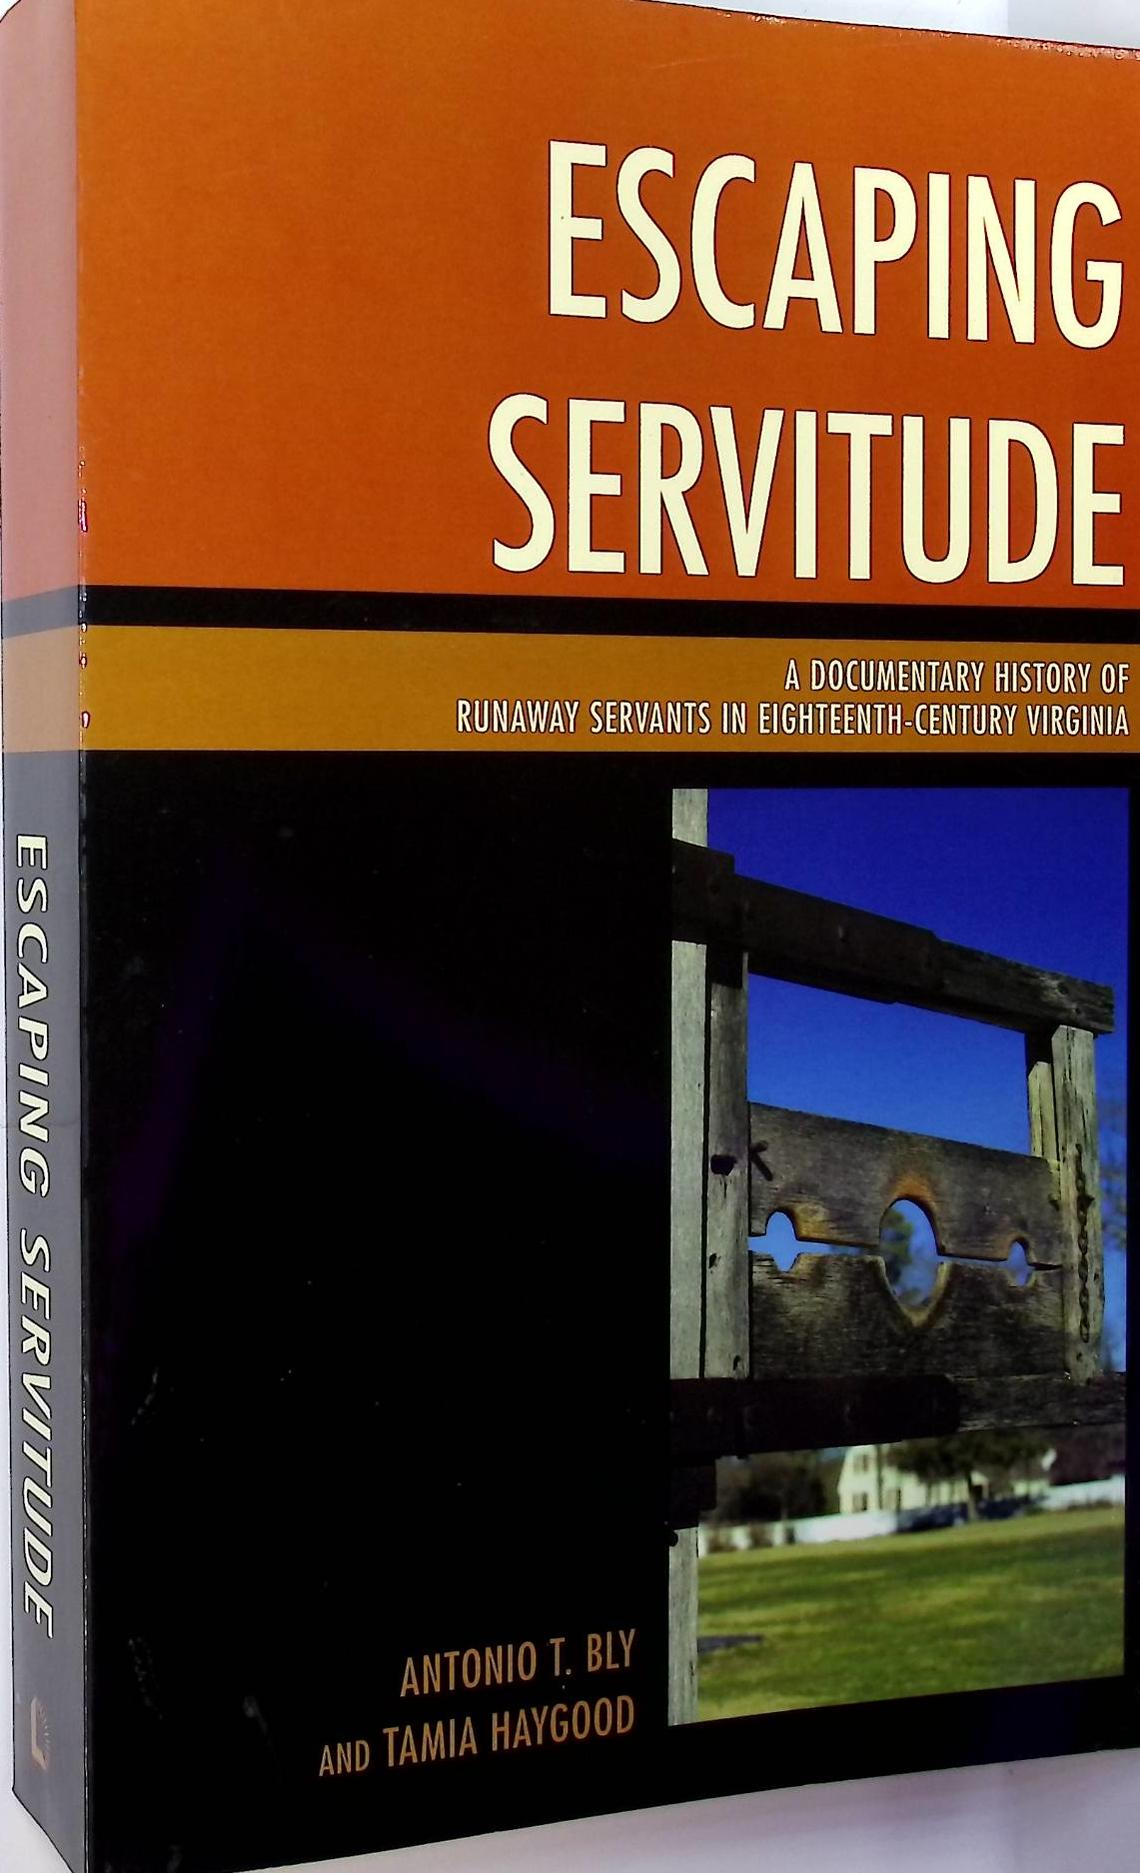 Escaping Servitude. A Documentary History of Runaway Servants in Eighteenth Century Vriginia